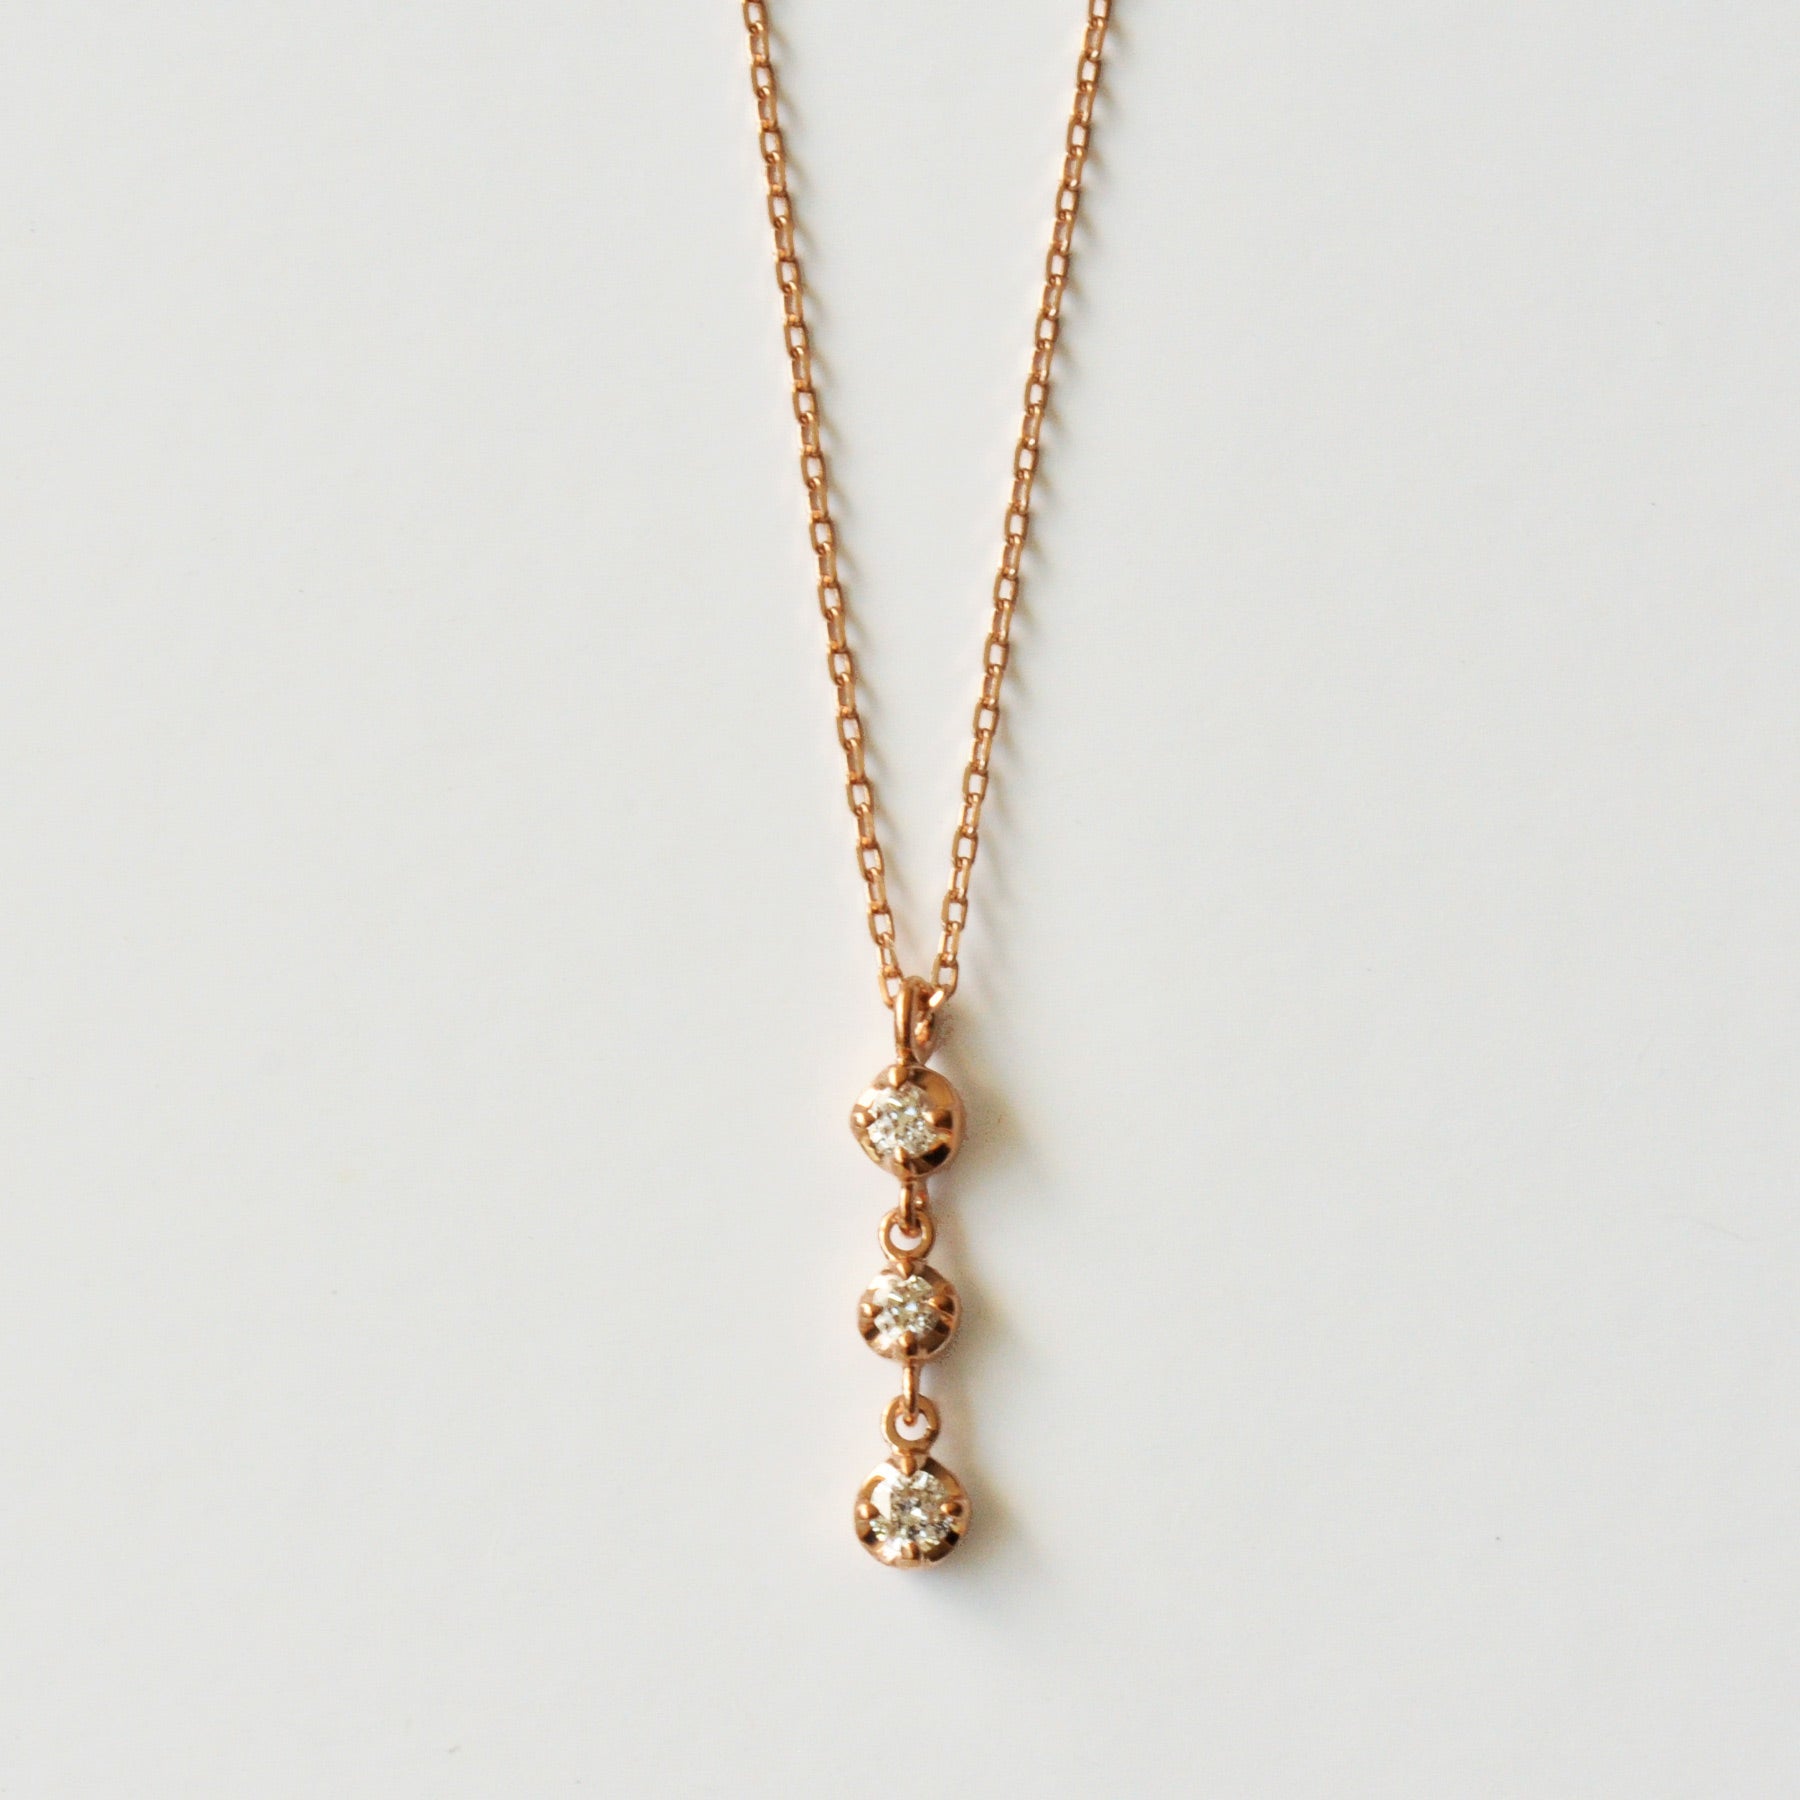 10K Rose Gold Diamond Trilogy Necklace - Product Image